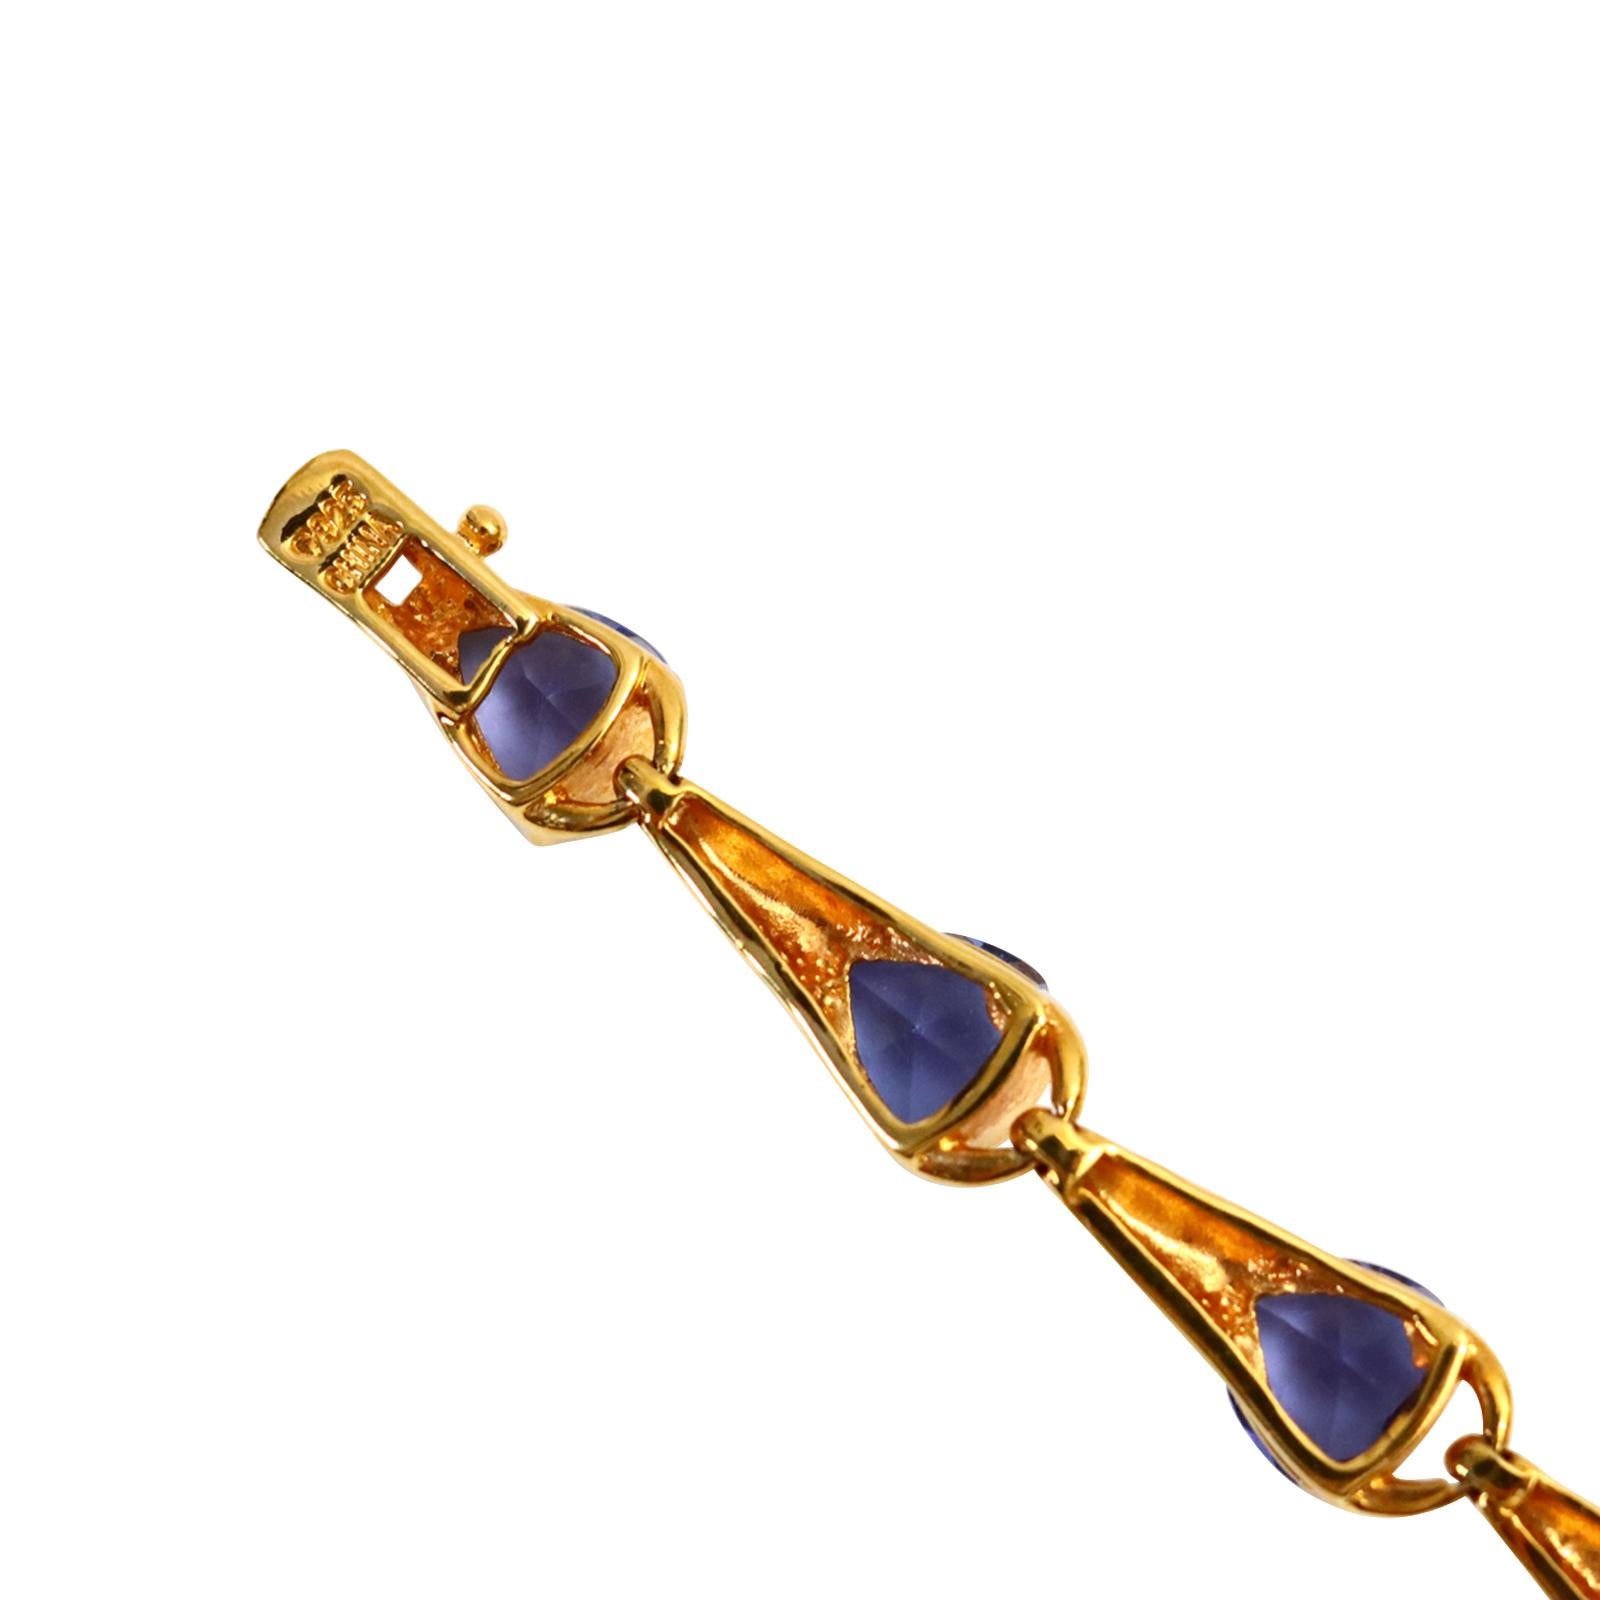 Vintage Sterling Gold Tone Link Bracelet with Blue Diamante Stones Circa 1990s For Sale 3